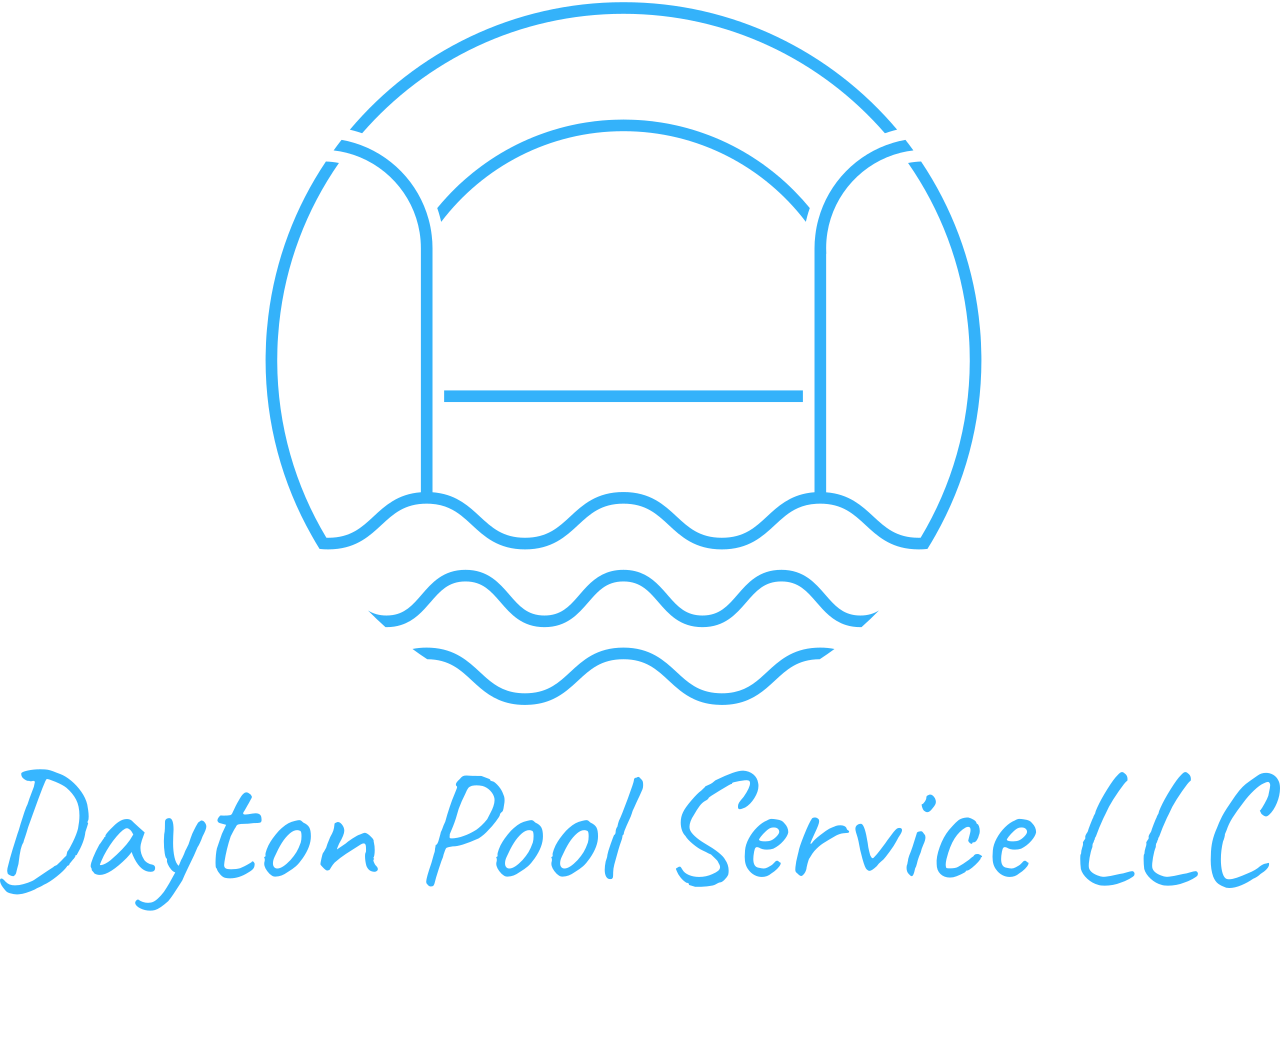 Dayton Pool Service LLC's logo